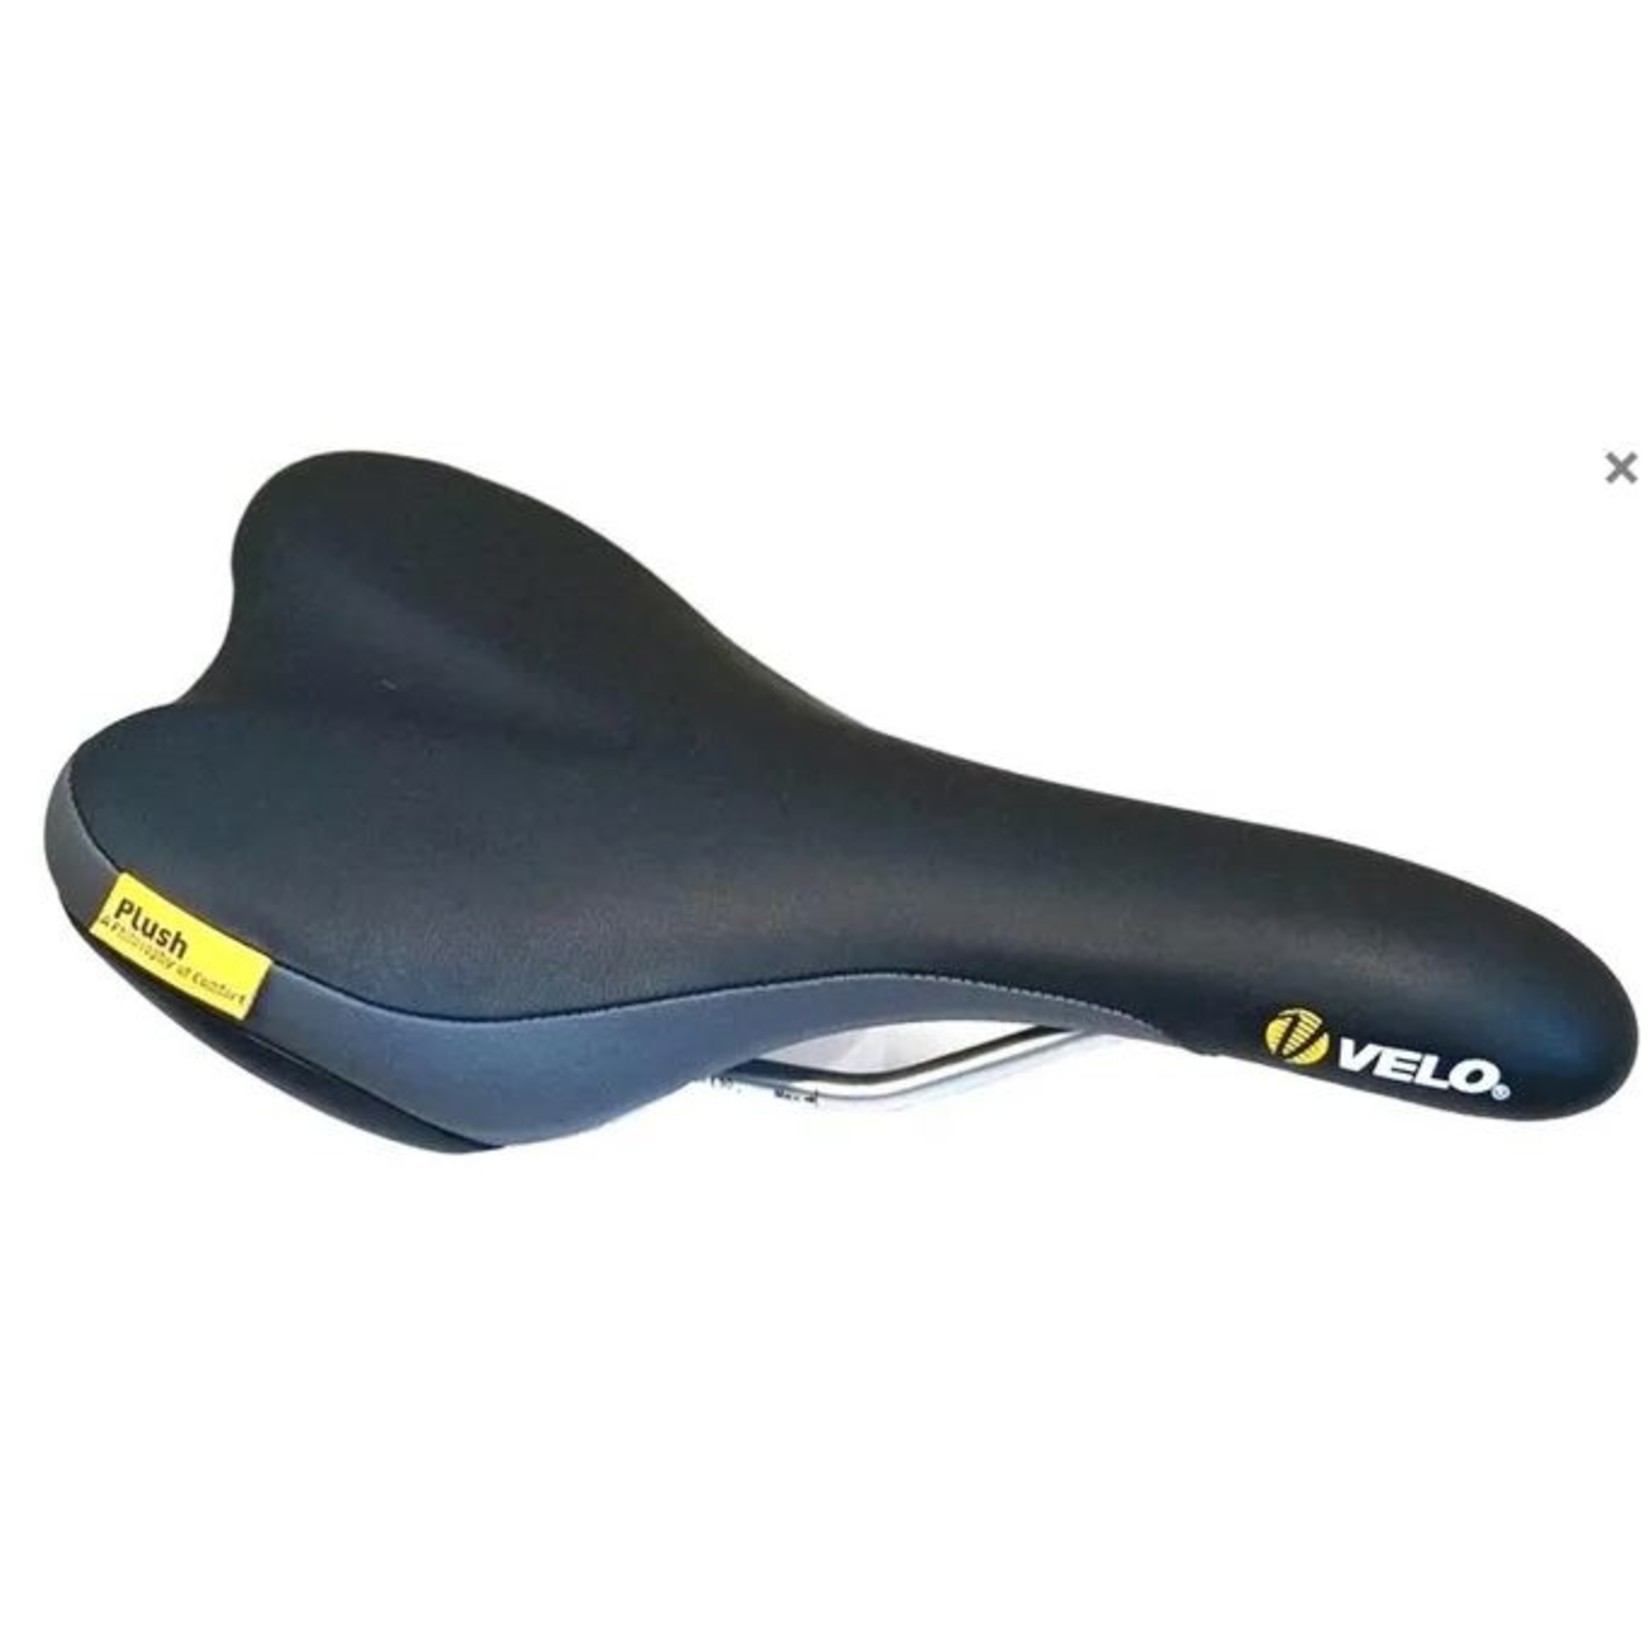 Velo Velo Bike/Cycling Plush Extra Comfort Sport Saddle 342G 271mmX149mm MTB Or Road